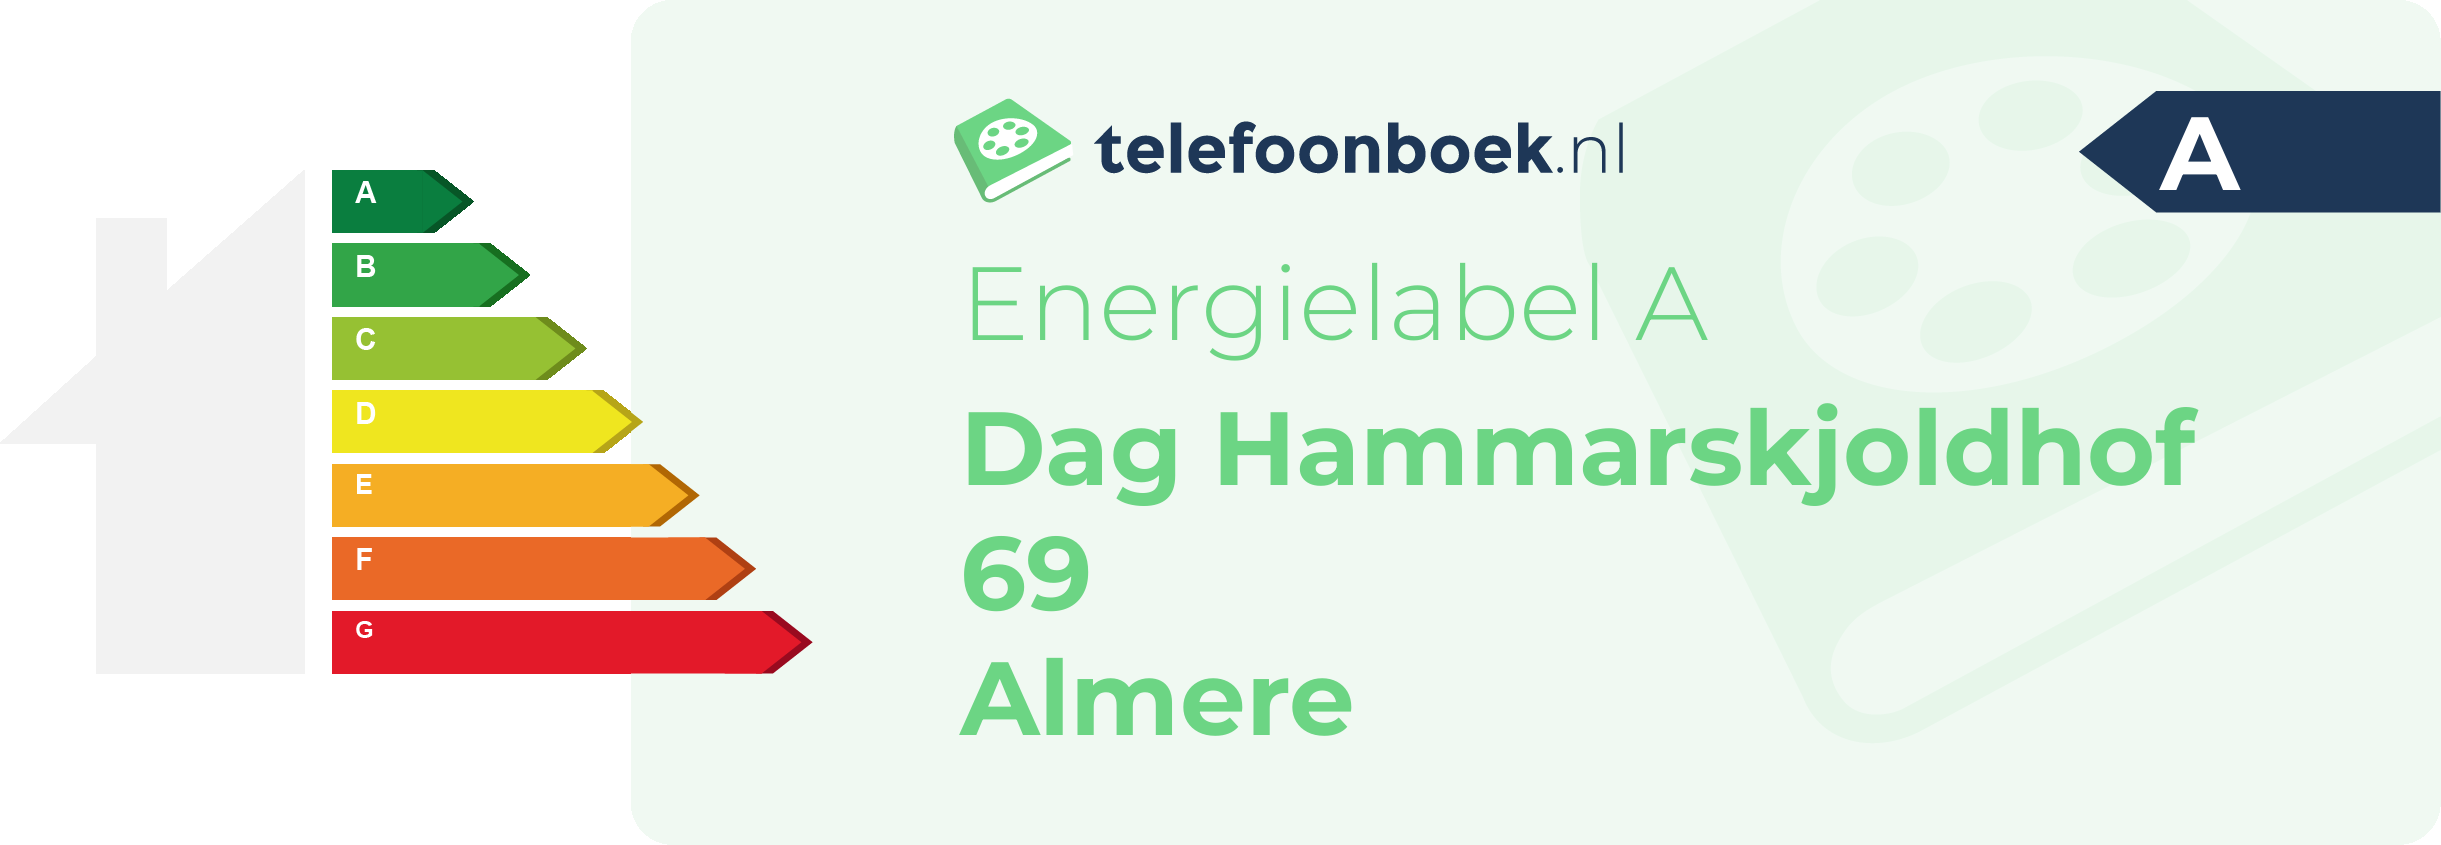 Energielabel Dag Hammarskjoldhof 69 Almere